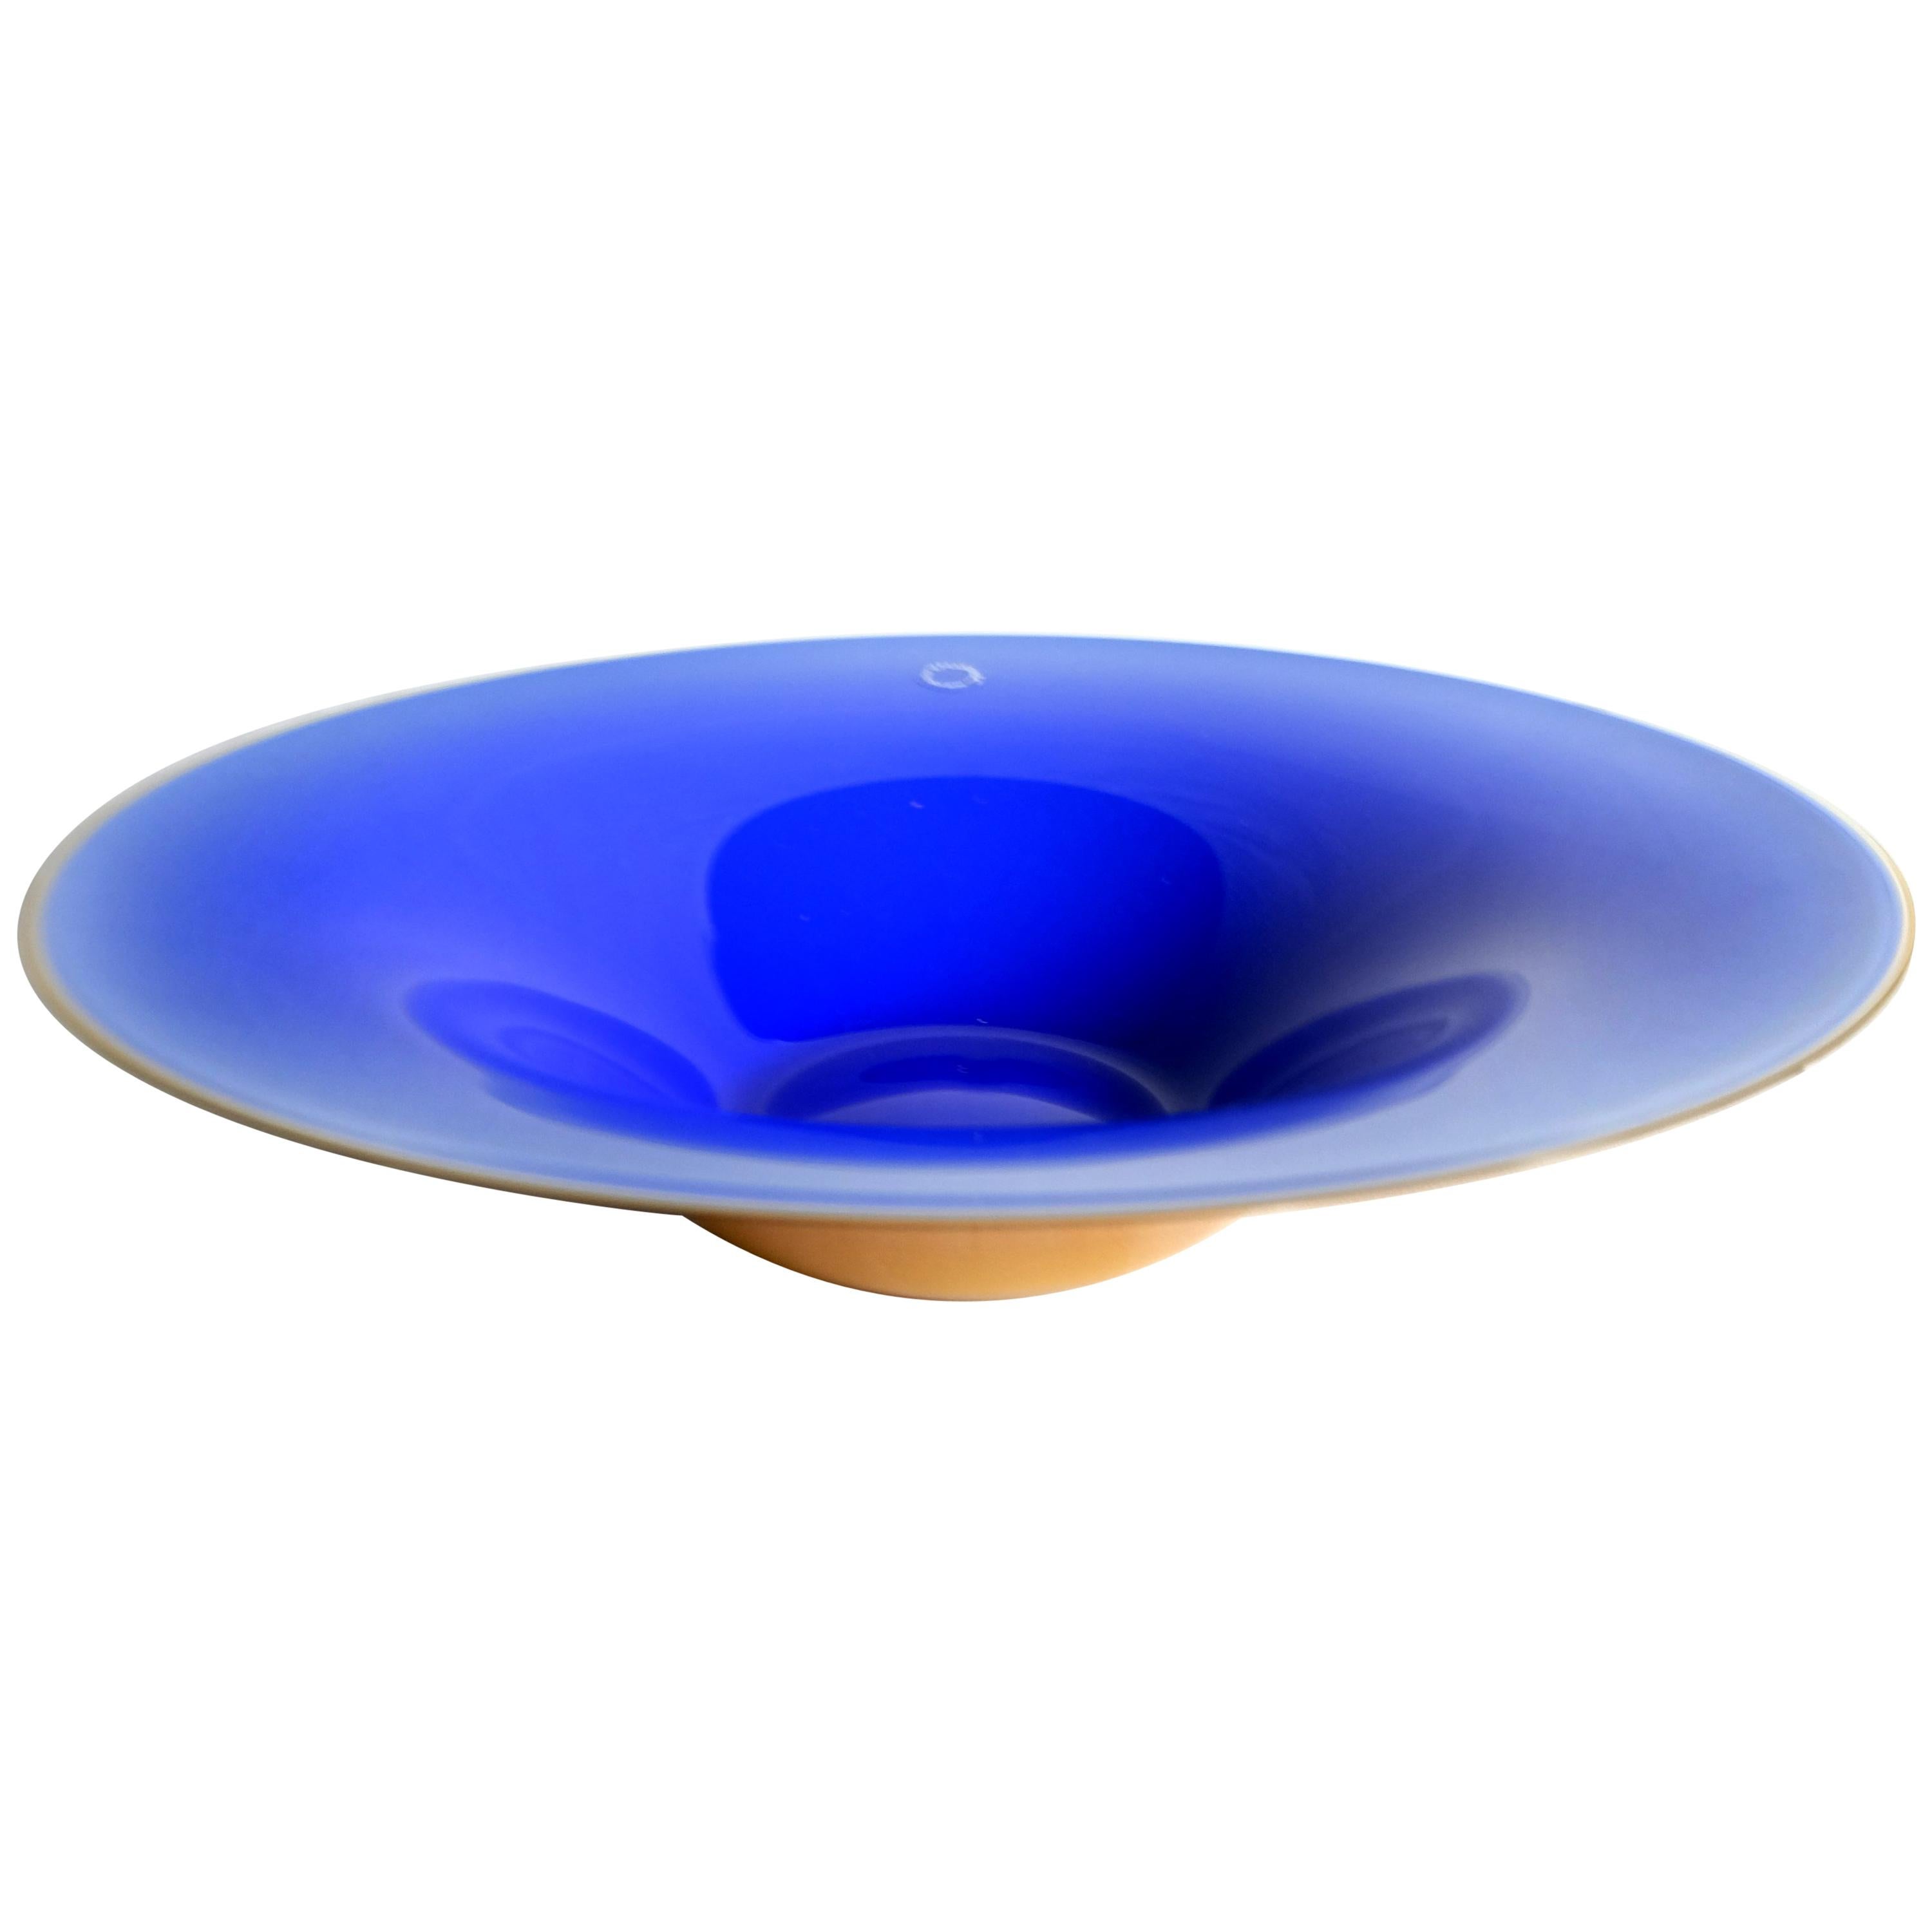 V. Nason & C., Italy Yellow and Blue Murano Glass Bowl